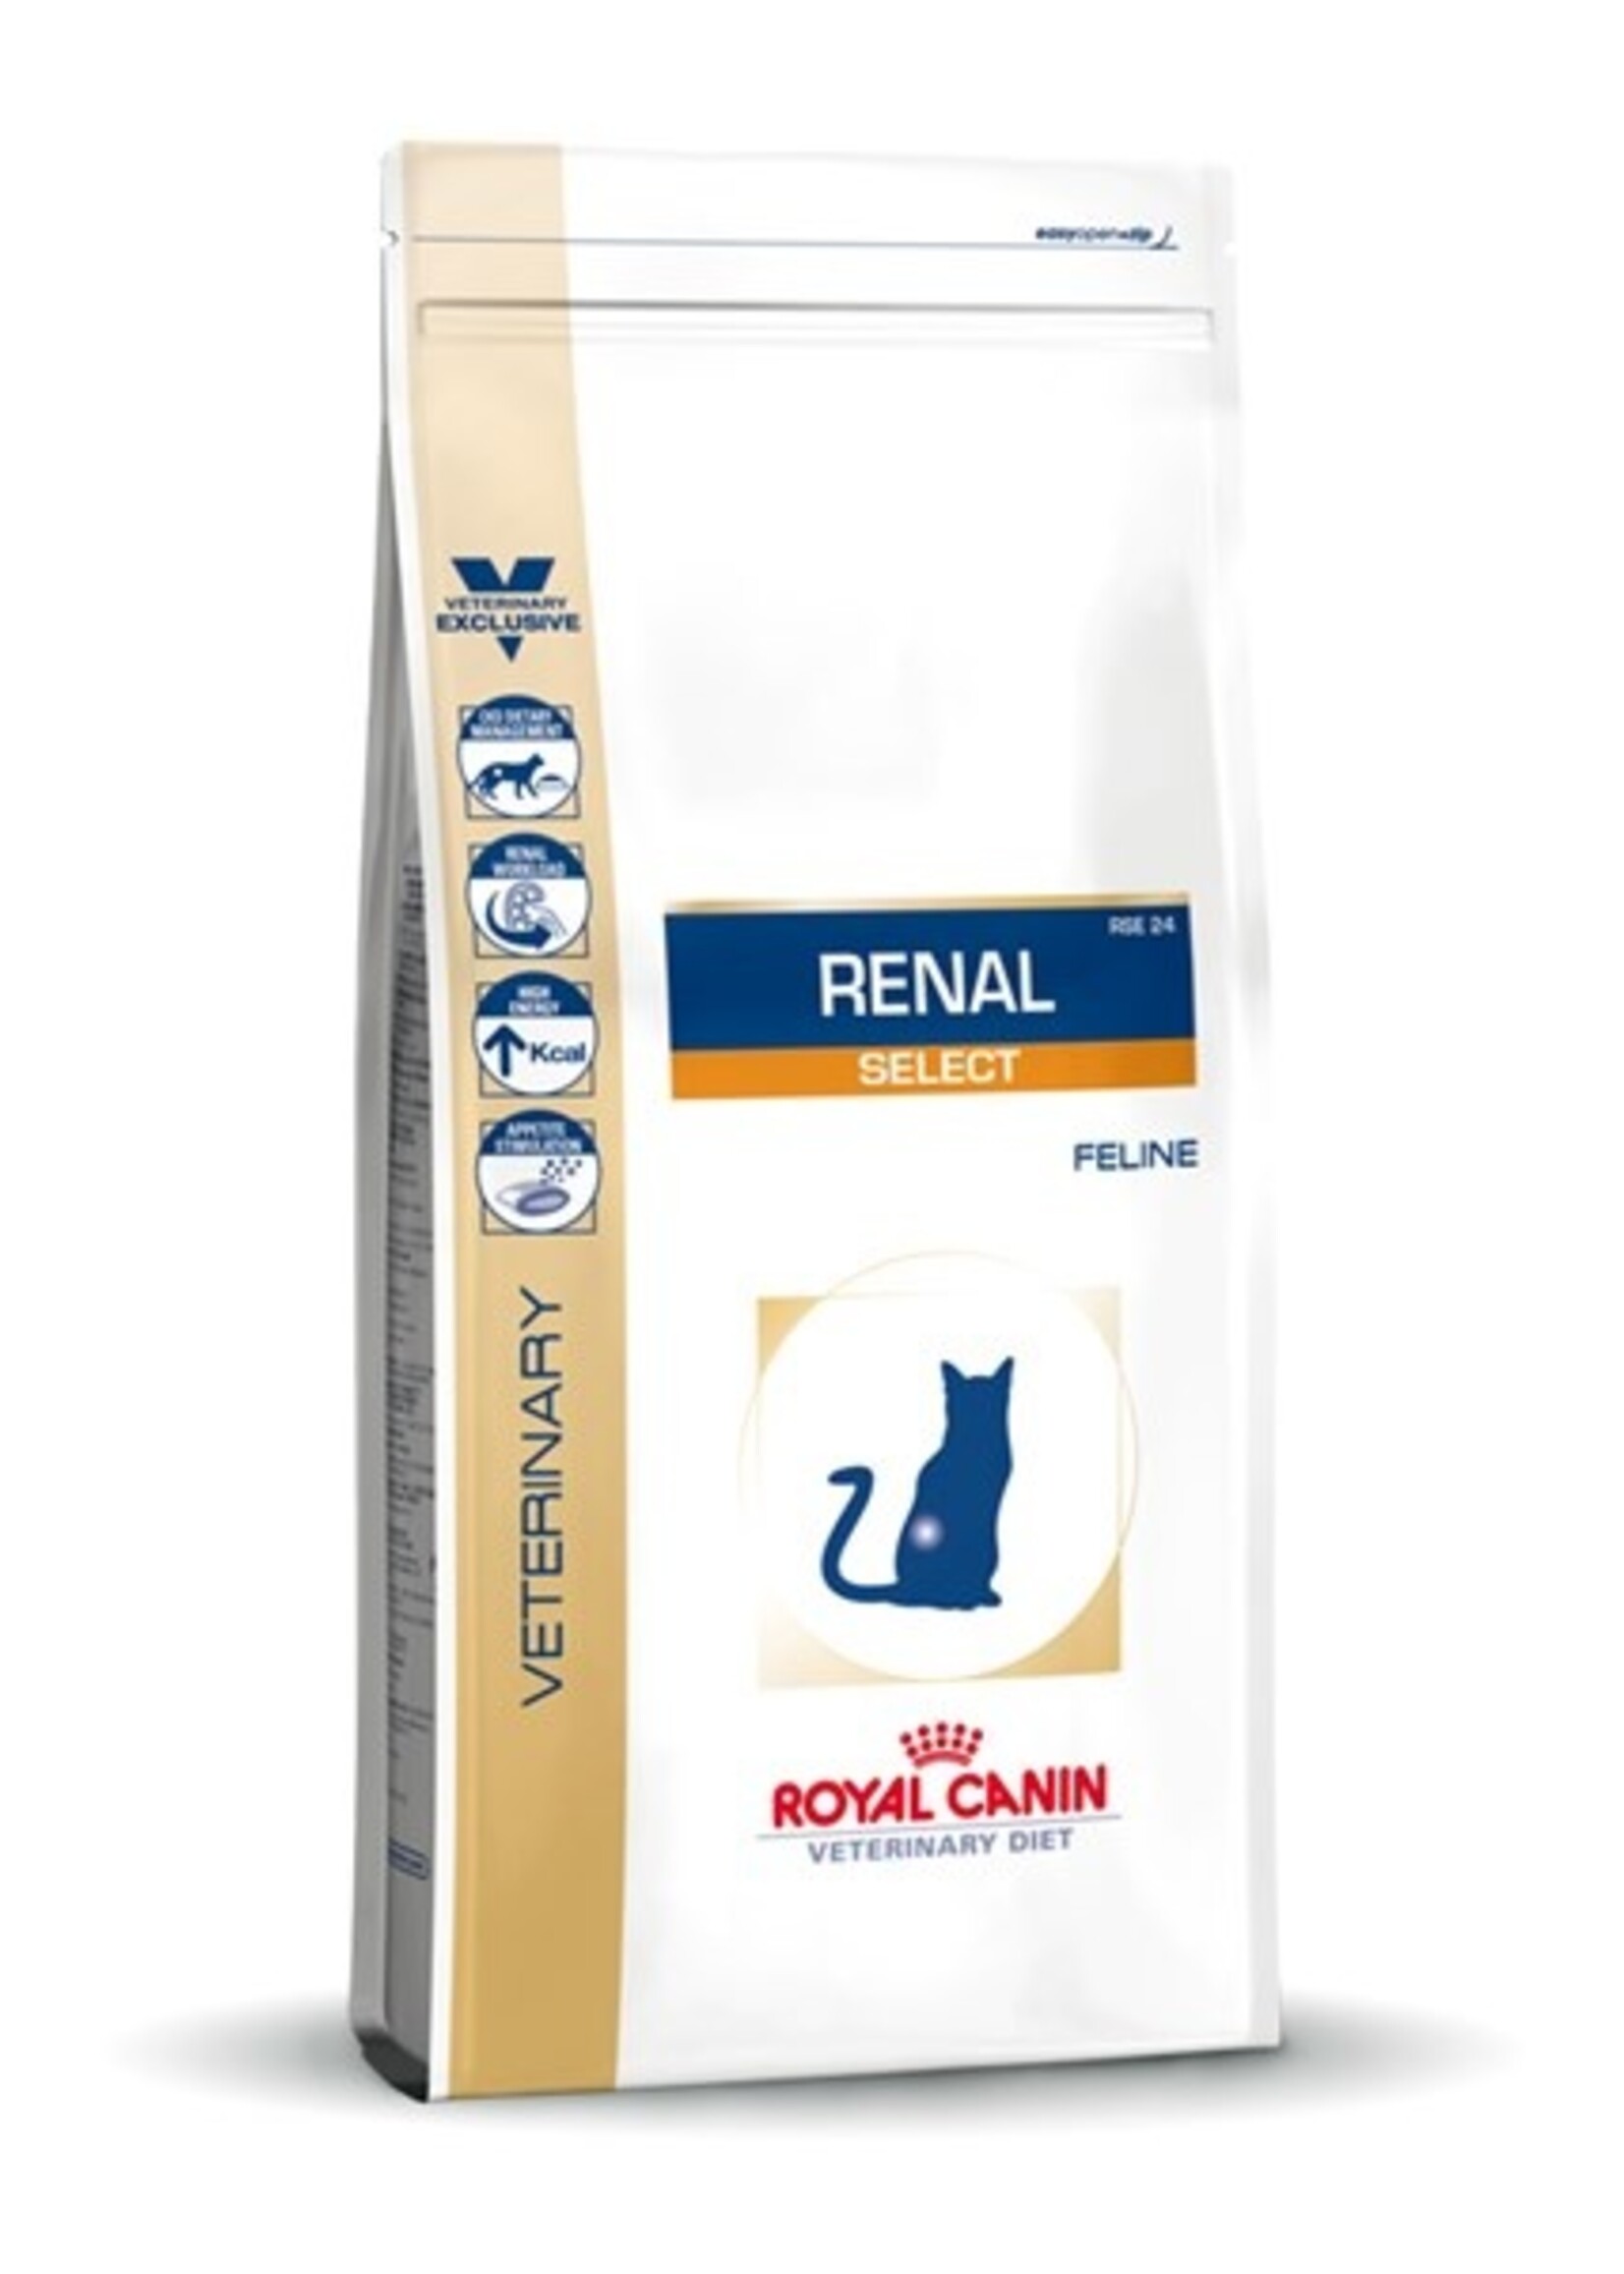 Royal Canin Royal Canin Vdiet Renal Select Cat 400g